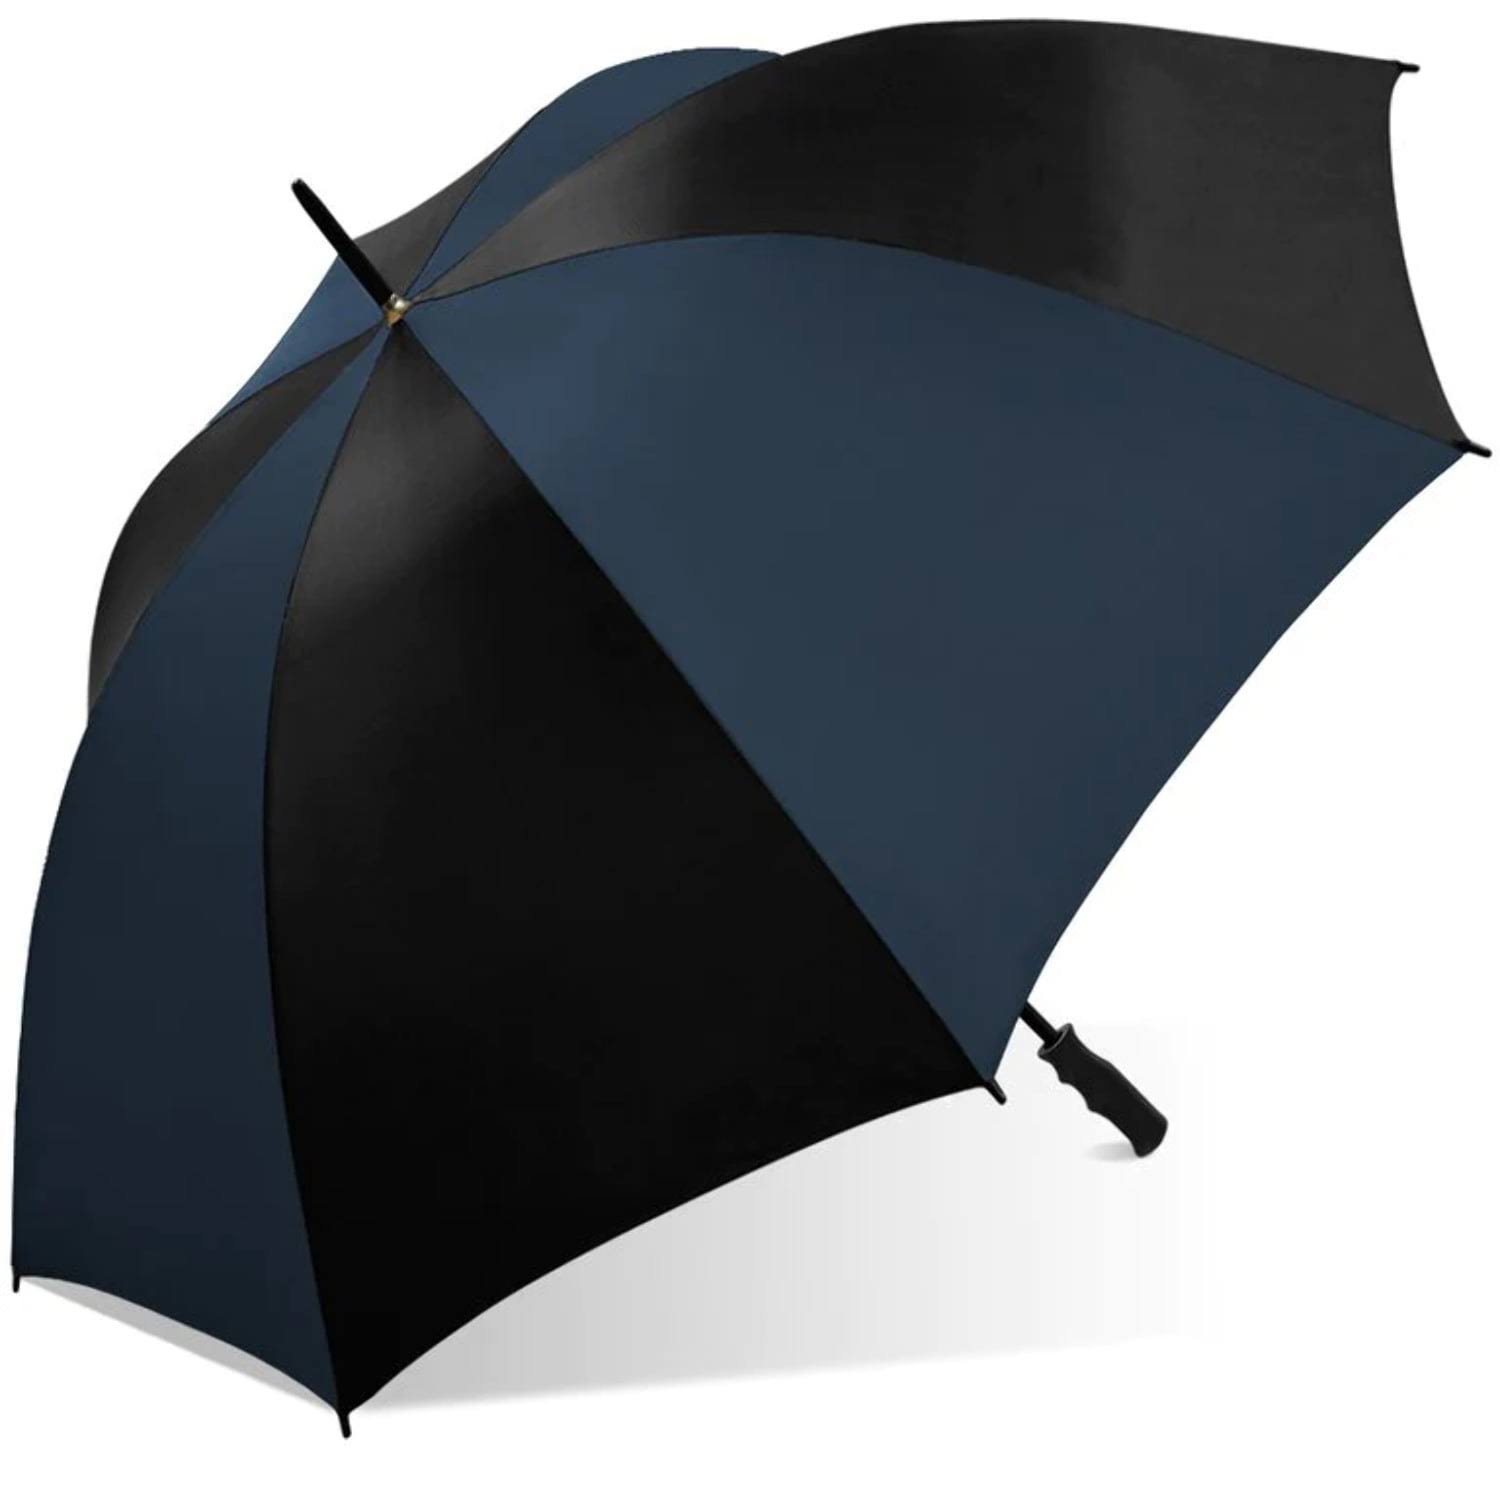 Chaby International MS-30 Assorted Golf Umbrella